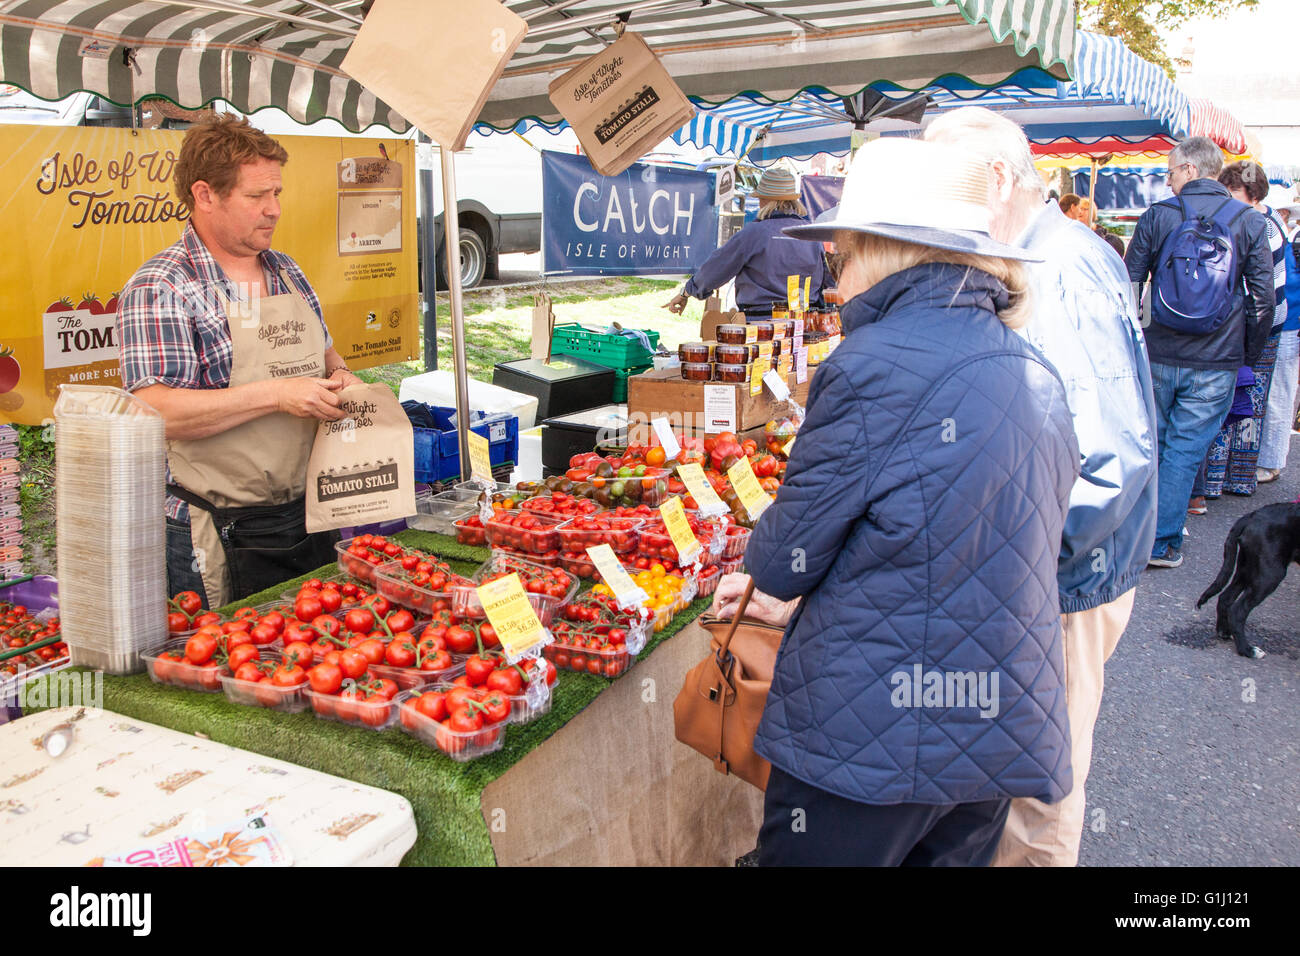 Isle of Wight tomato stall at the Alresford watercress festival 2016, New Alresford, Hampshire, England, United Kingdom. Stock Photo